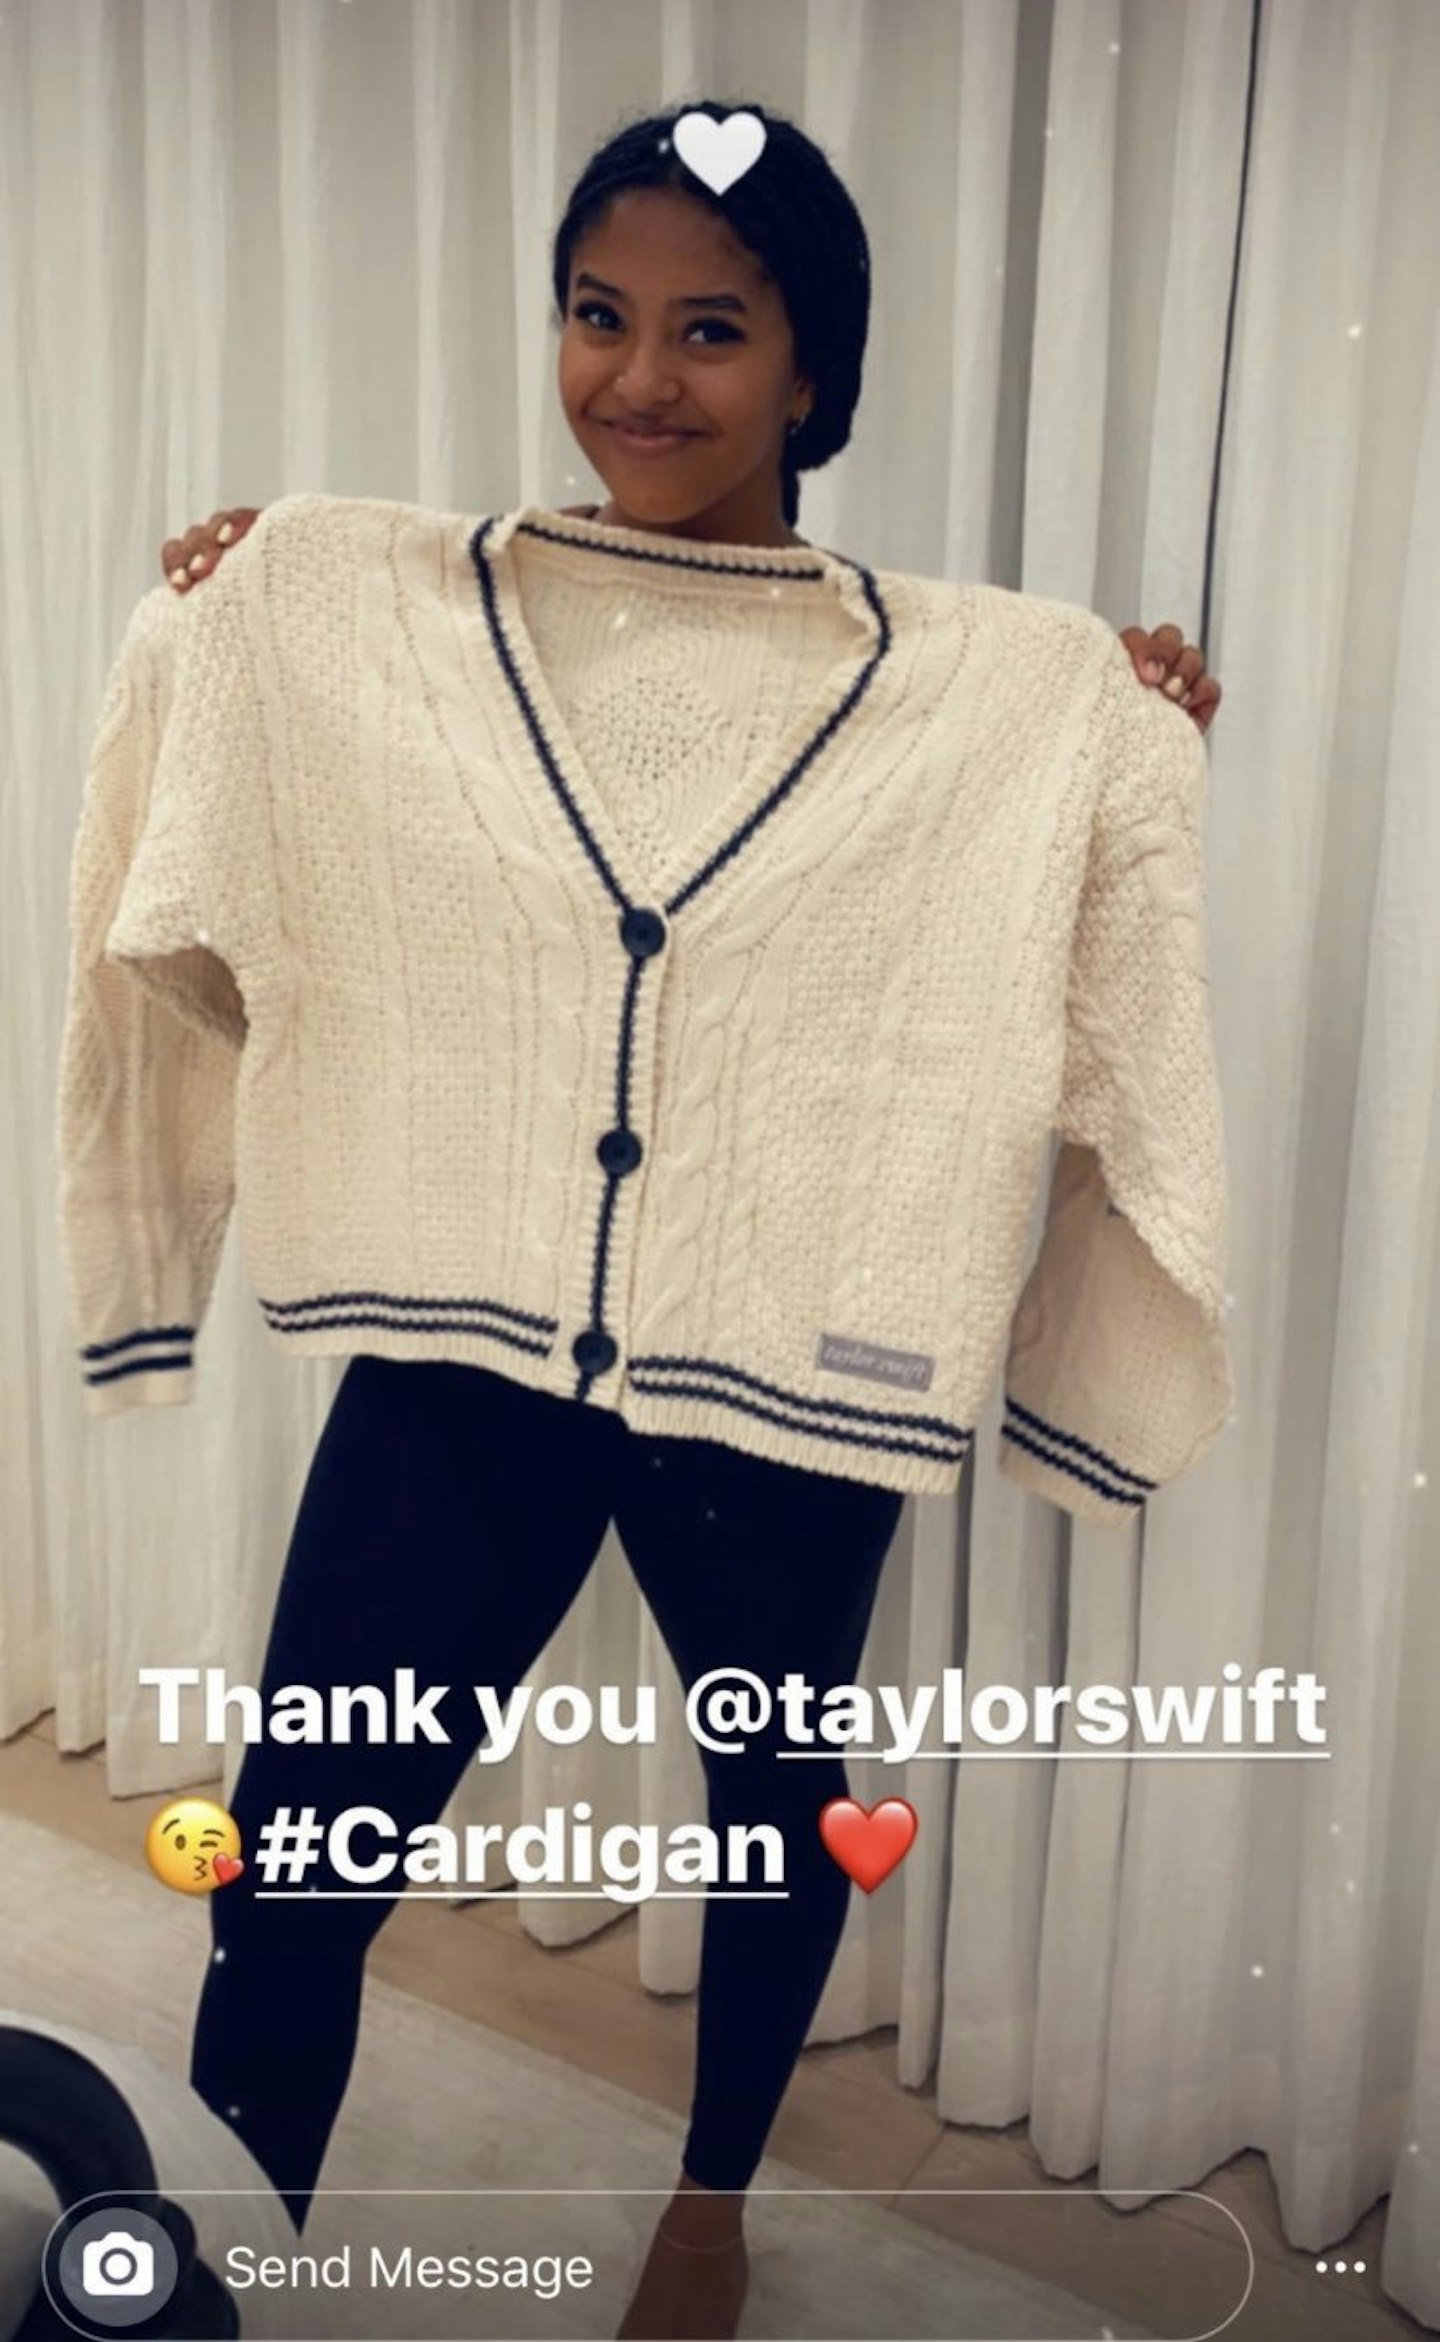 Cardigan Crew: Meet Taylor Swift's New Squad